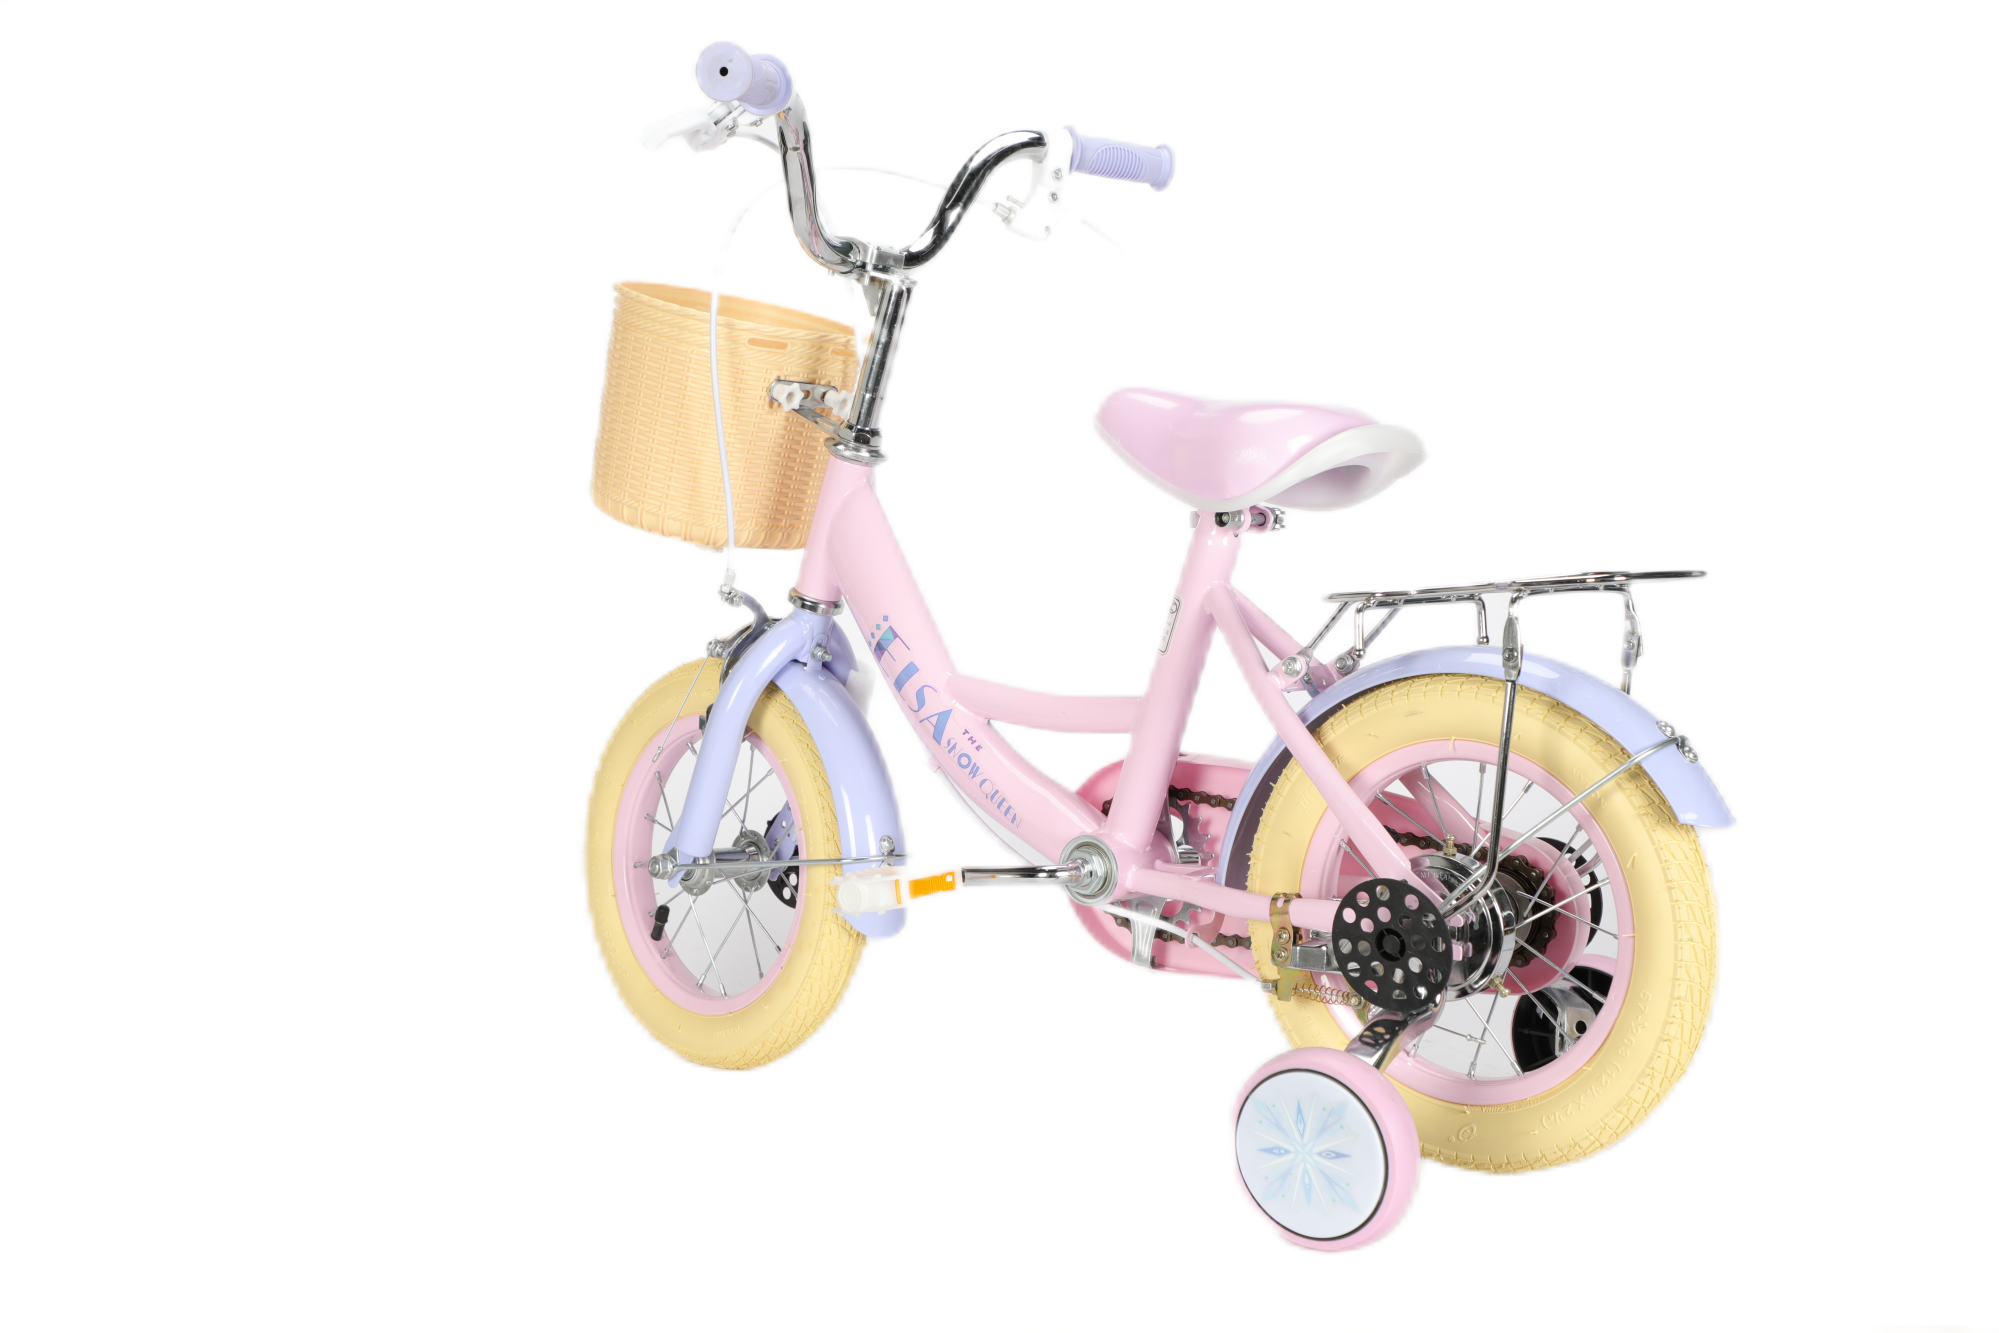 Disney Frozen children bicycle Kids Hot Sale Pink yello wheel